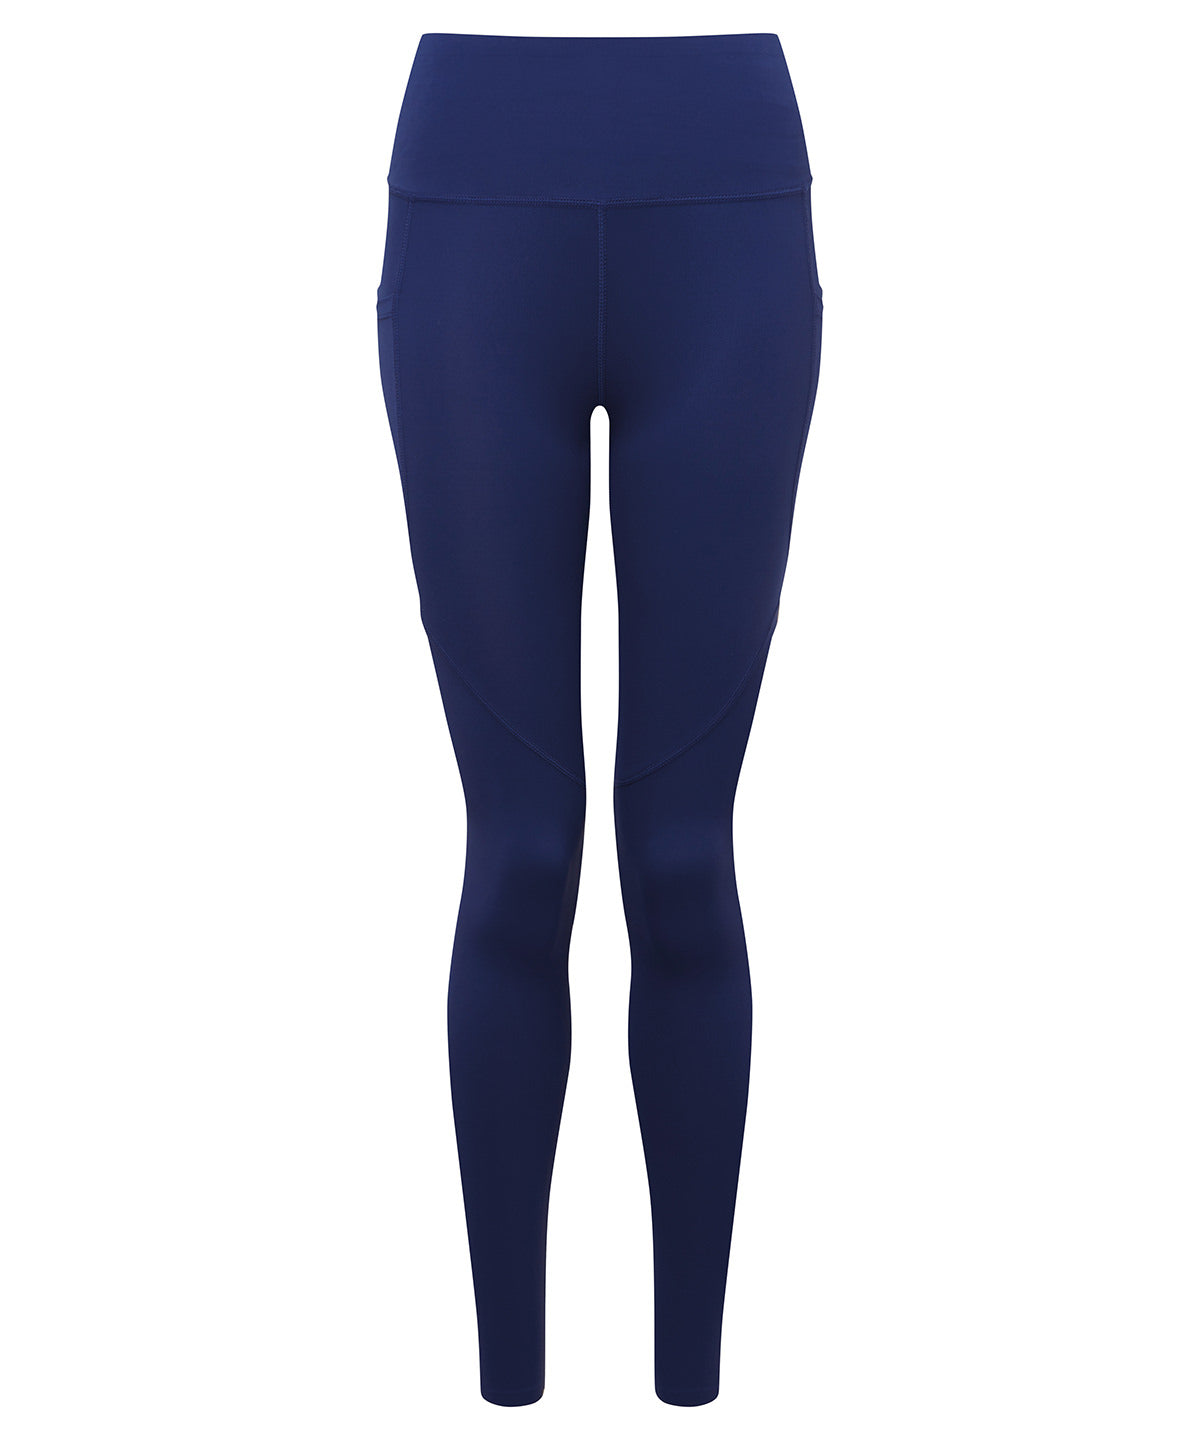 Women's TriDri® hourglass leggings